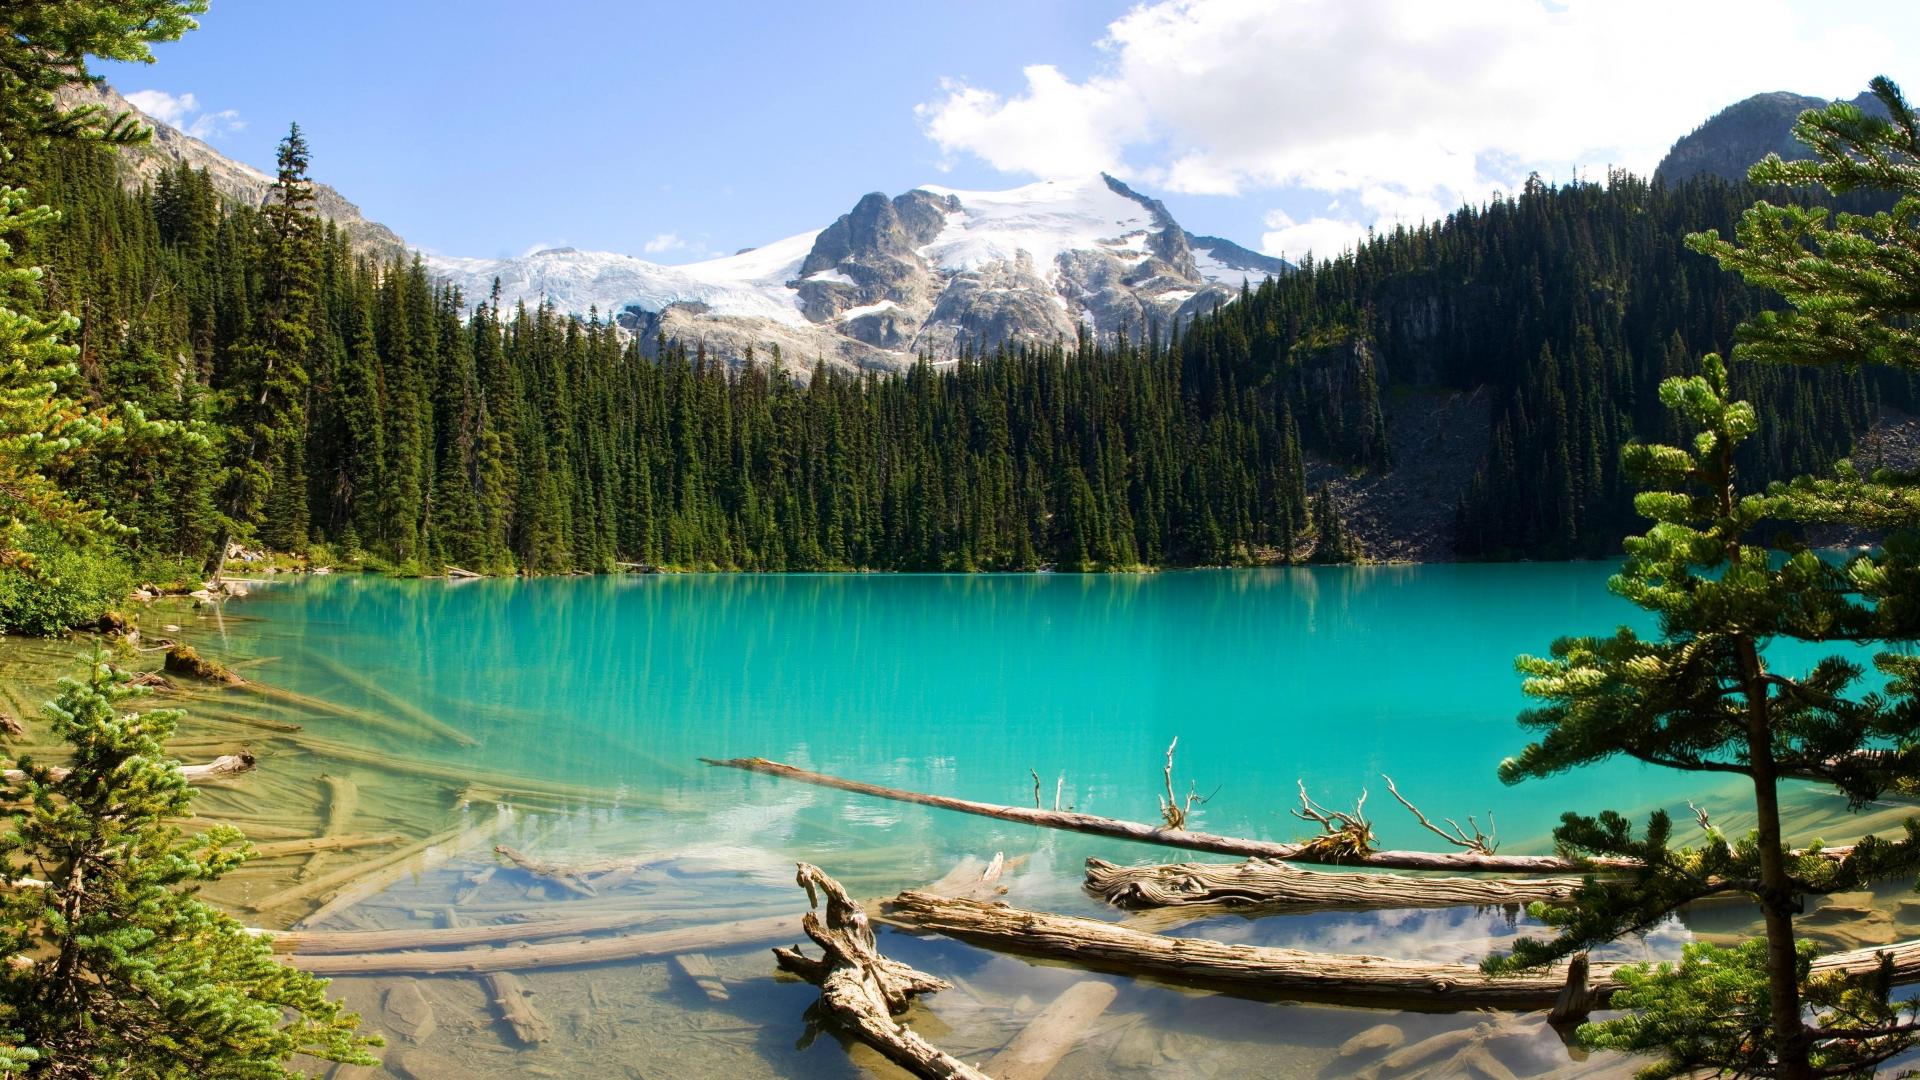 Water Canada Turquoise British Columbia Mountain Snowy Peak Landscape